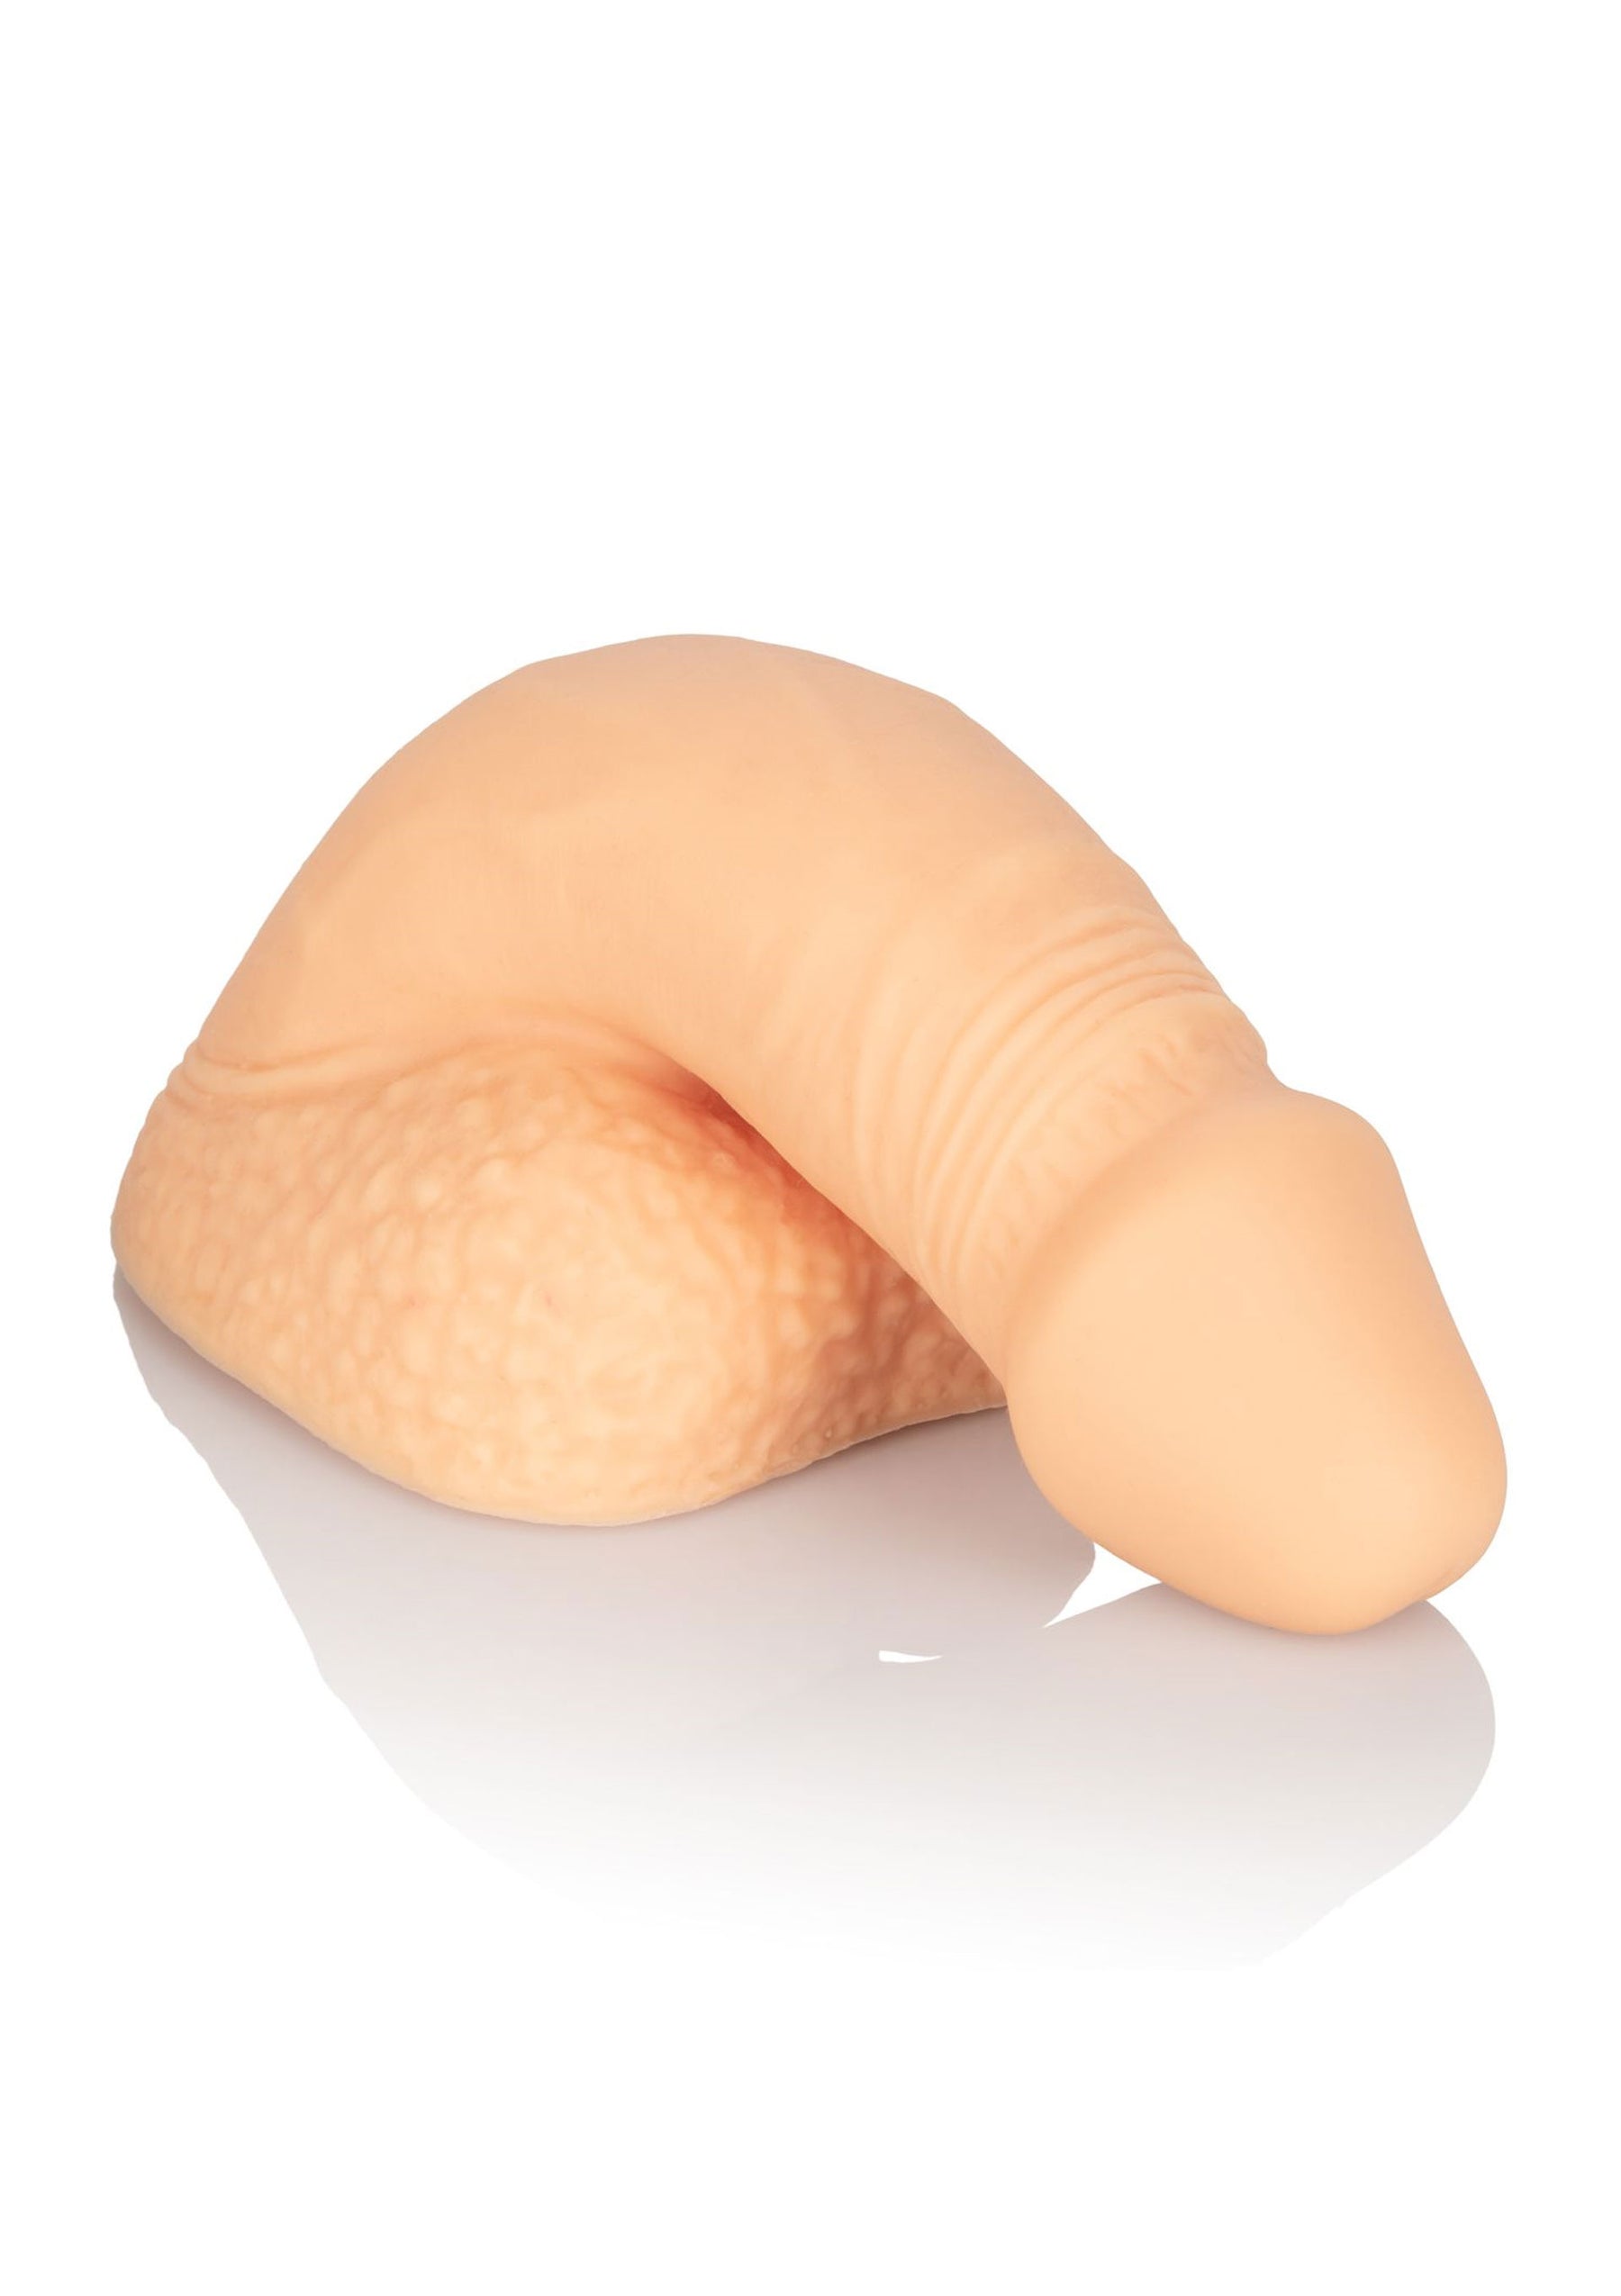 5 inch Silicone Packing Penis-erotic-world-munchen.myshopify.com